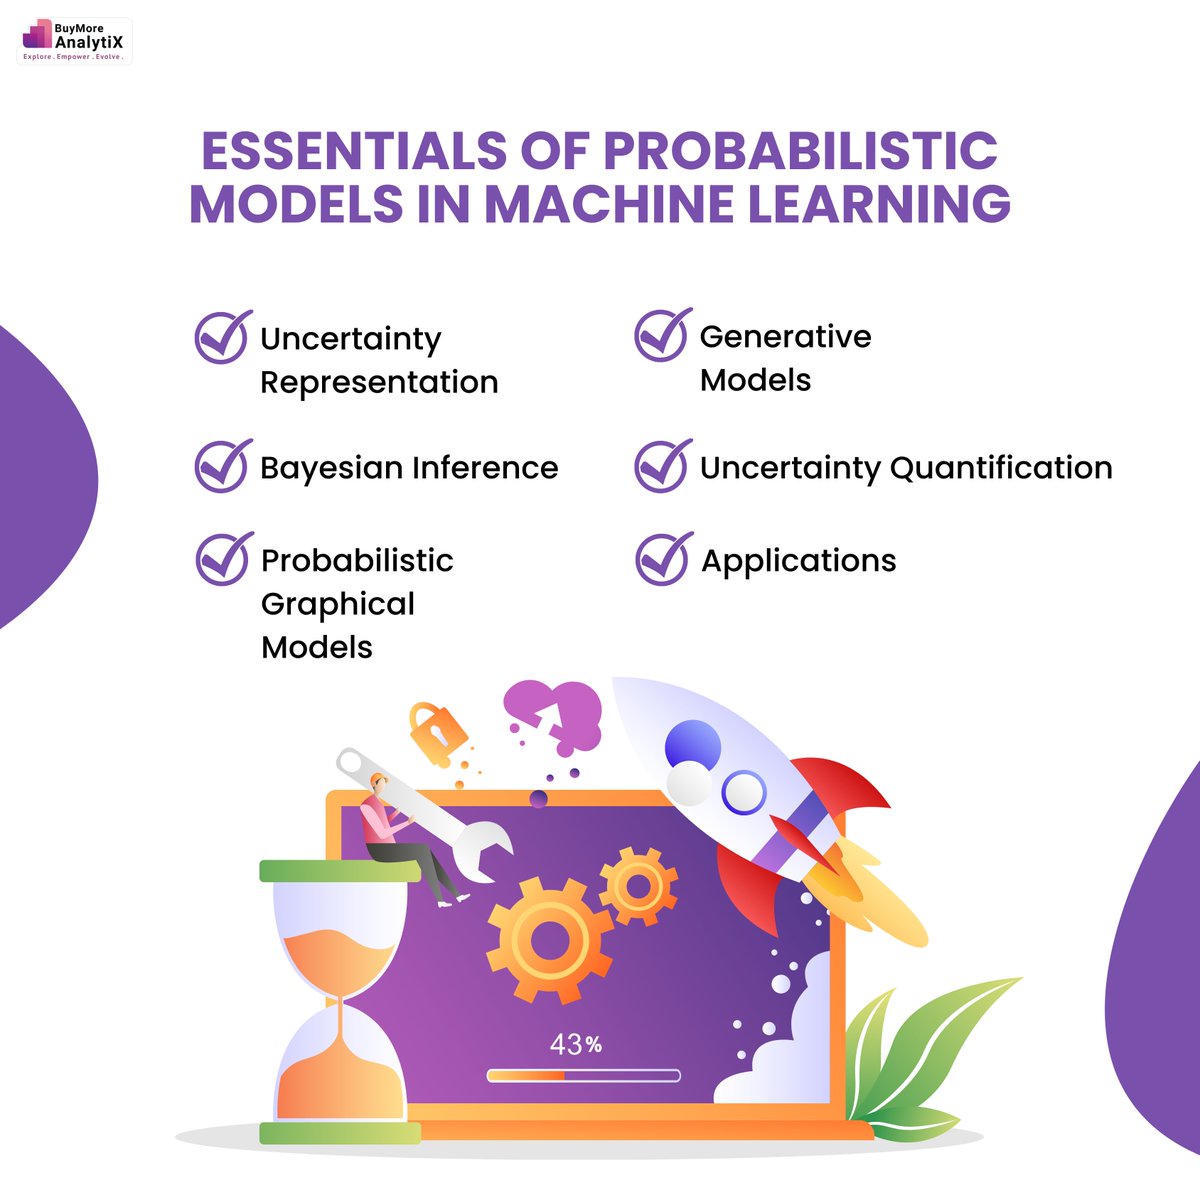 Essentials of Probabilistic Models in Machine Learning! 🤖

#MachineLearning #ProbabilisticModels #BayesianInference #GraphicalModels #GenerativeModels #DataScience #AIApplications #DecisionMaking #DataAnalysis #ArtificialIntelligence #MLAlgorithms #DataAnalytics #BuymoreAnalytix